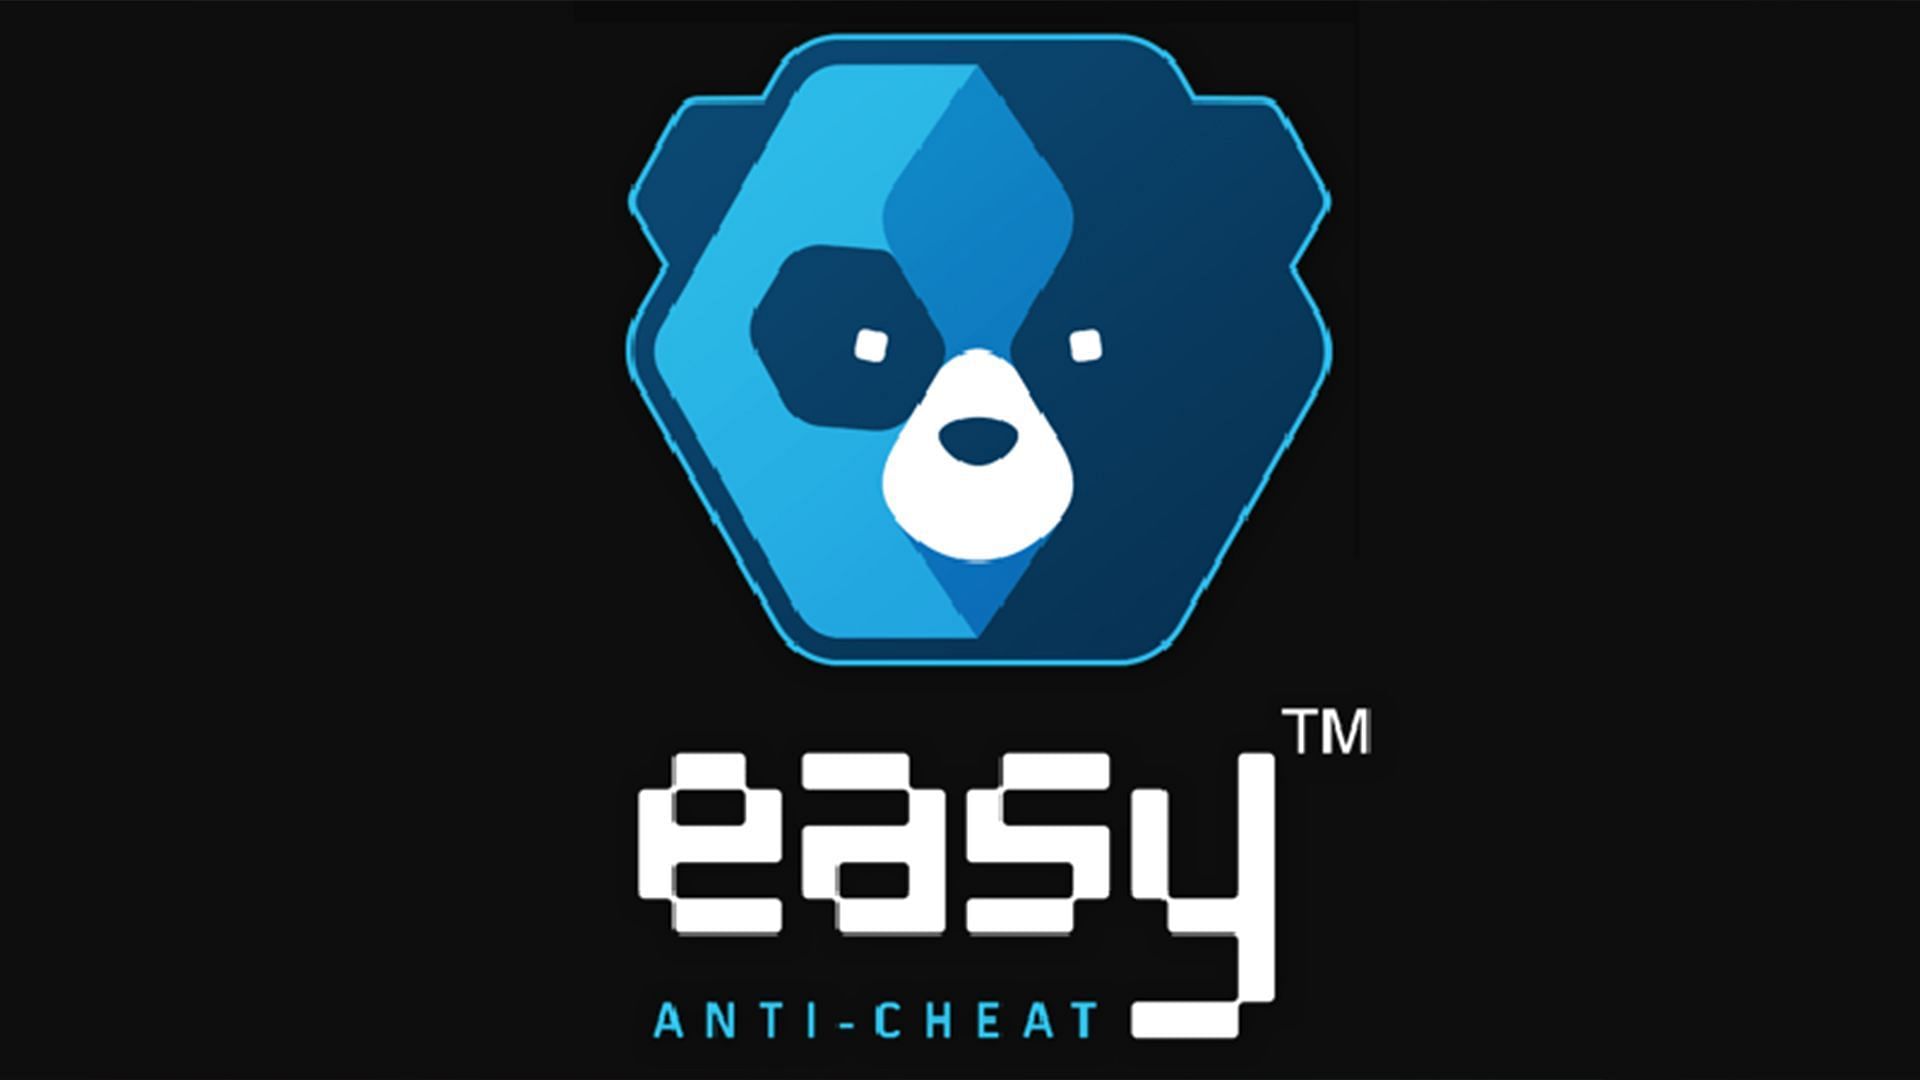 Easy Anti Cheat (Image via EAC)